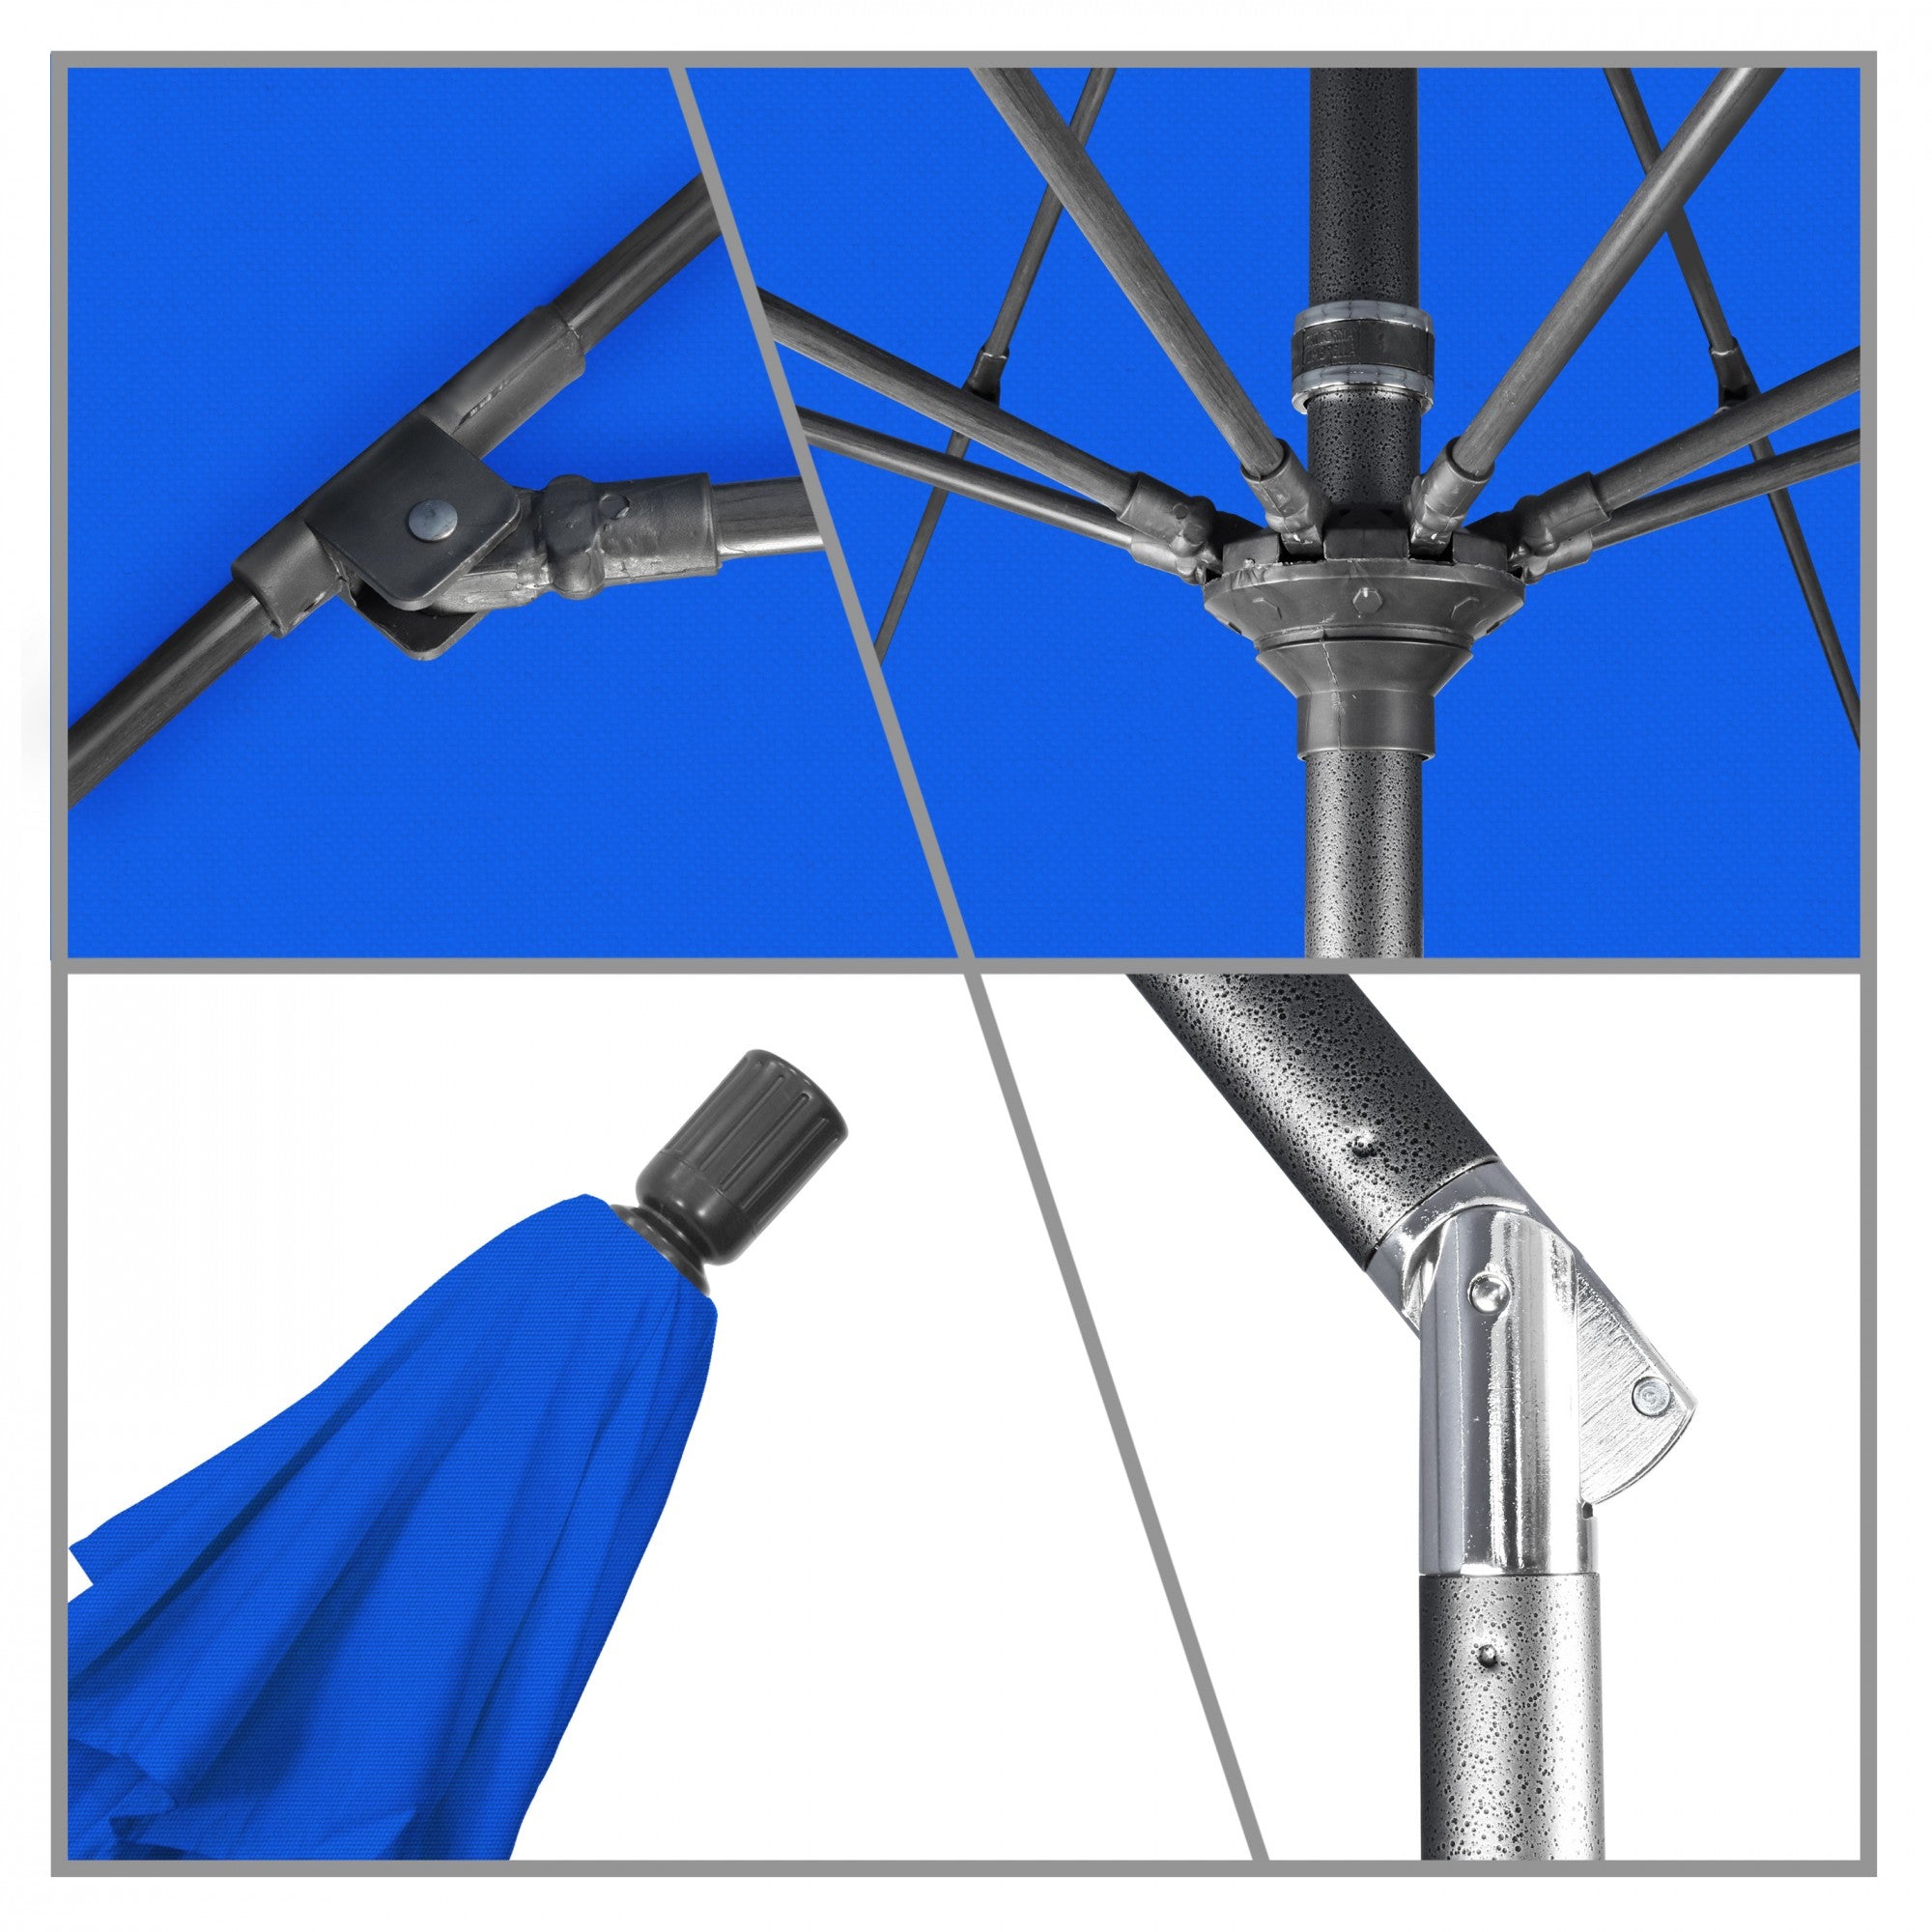 California Umbrella - 9' - Patio Umbrella Umbrella - Aluminum Pole - Royal Blue - Olefin - GSCUF908010-F03